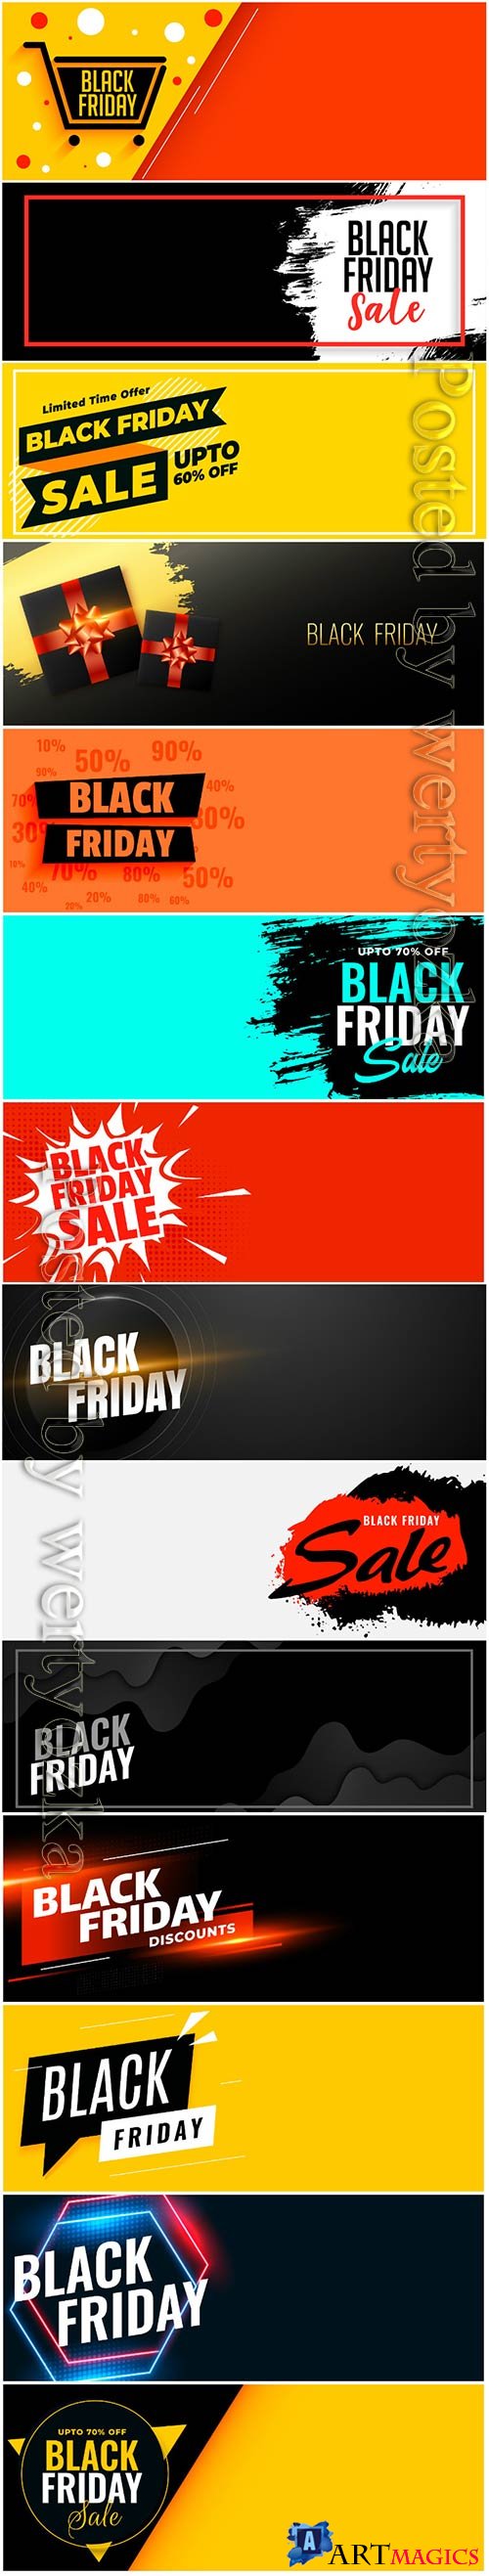 Black friday sale discounts shiny banner on black background